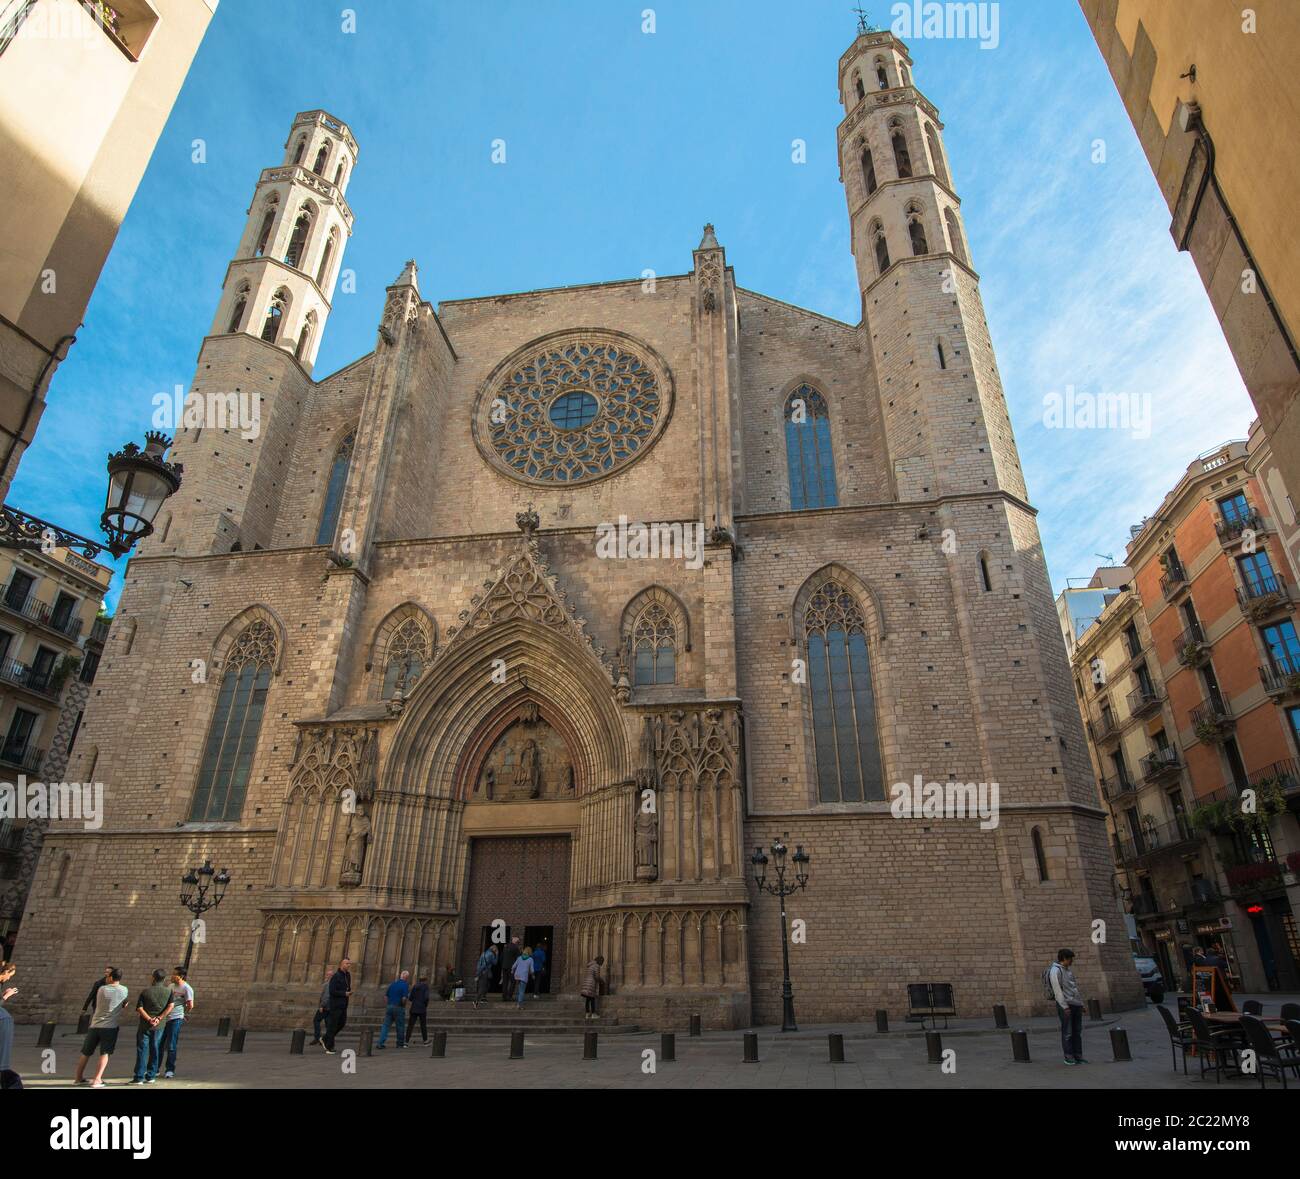 L'église Santa Maria del Mar (Sainte Marie de la mer) est un exemple remarquable de gothique catalan, construite en 1329-1383, quartier de Ribera, Barcelone, Espagne Banque D'Images